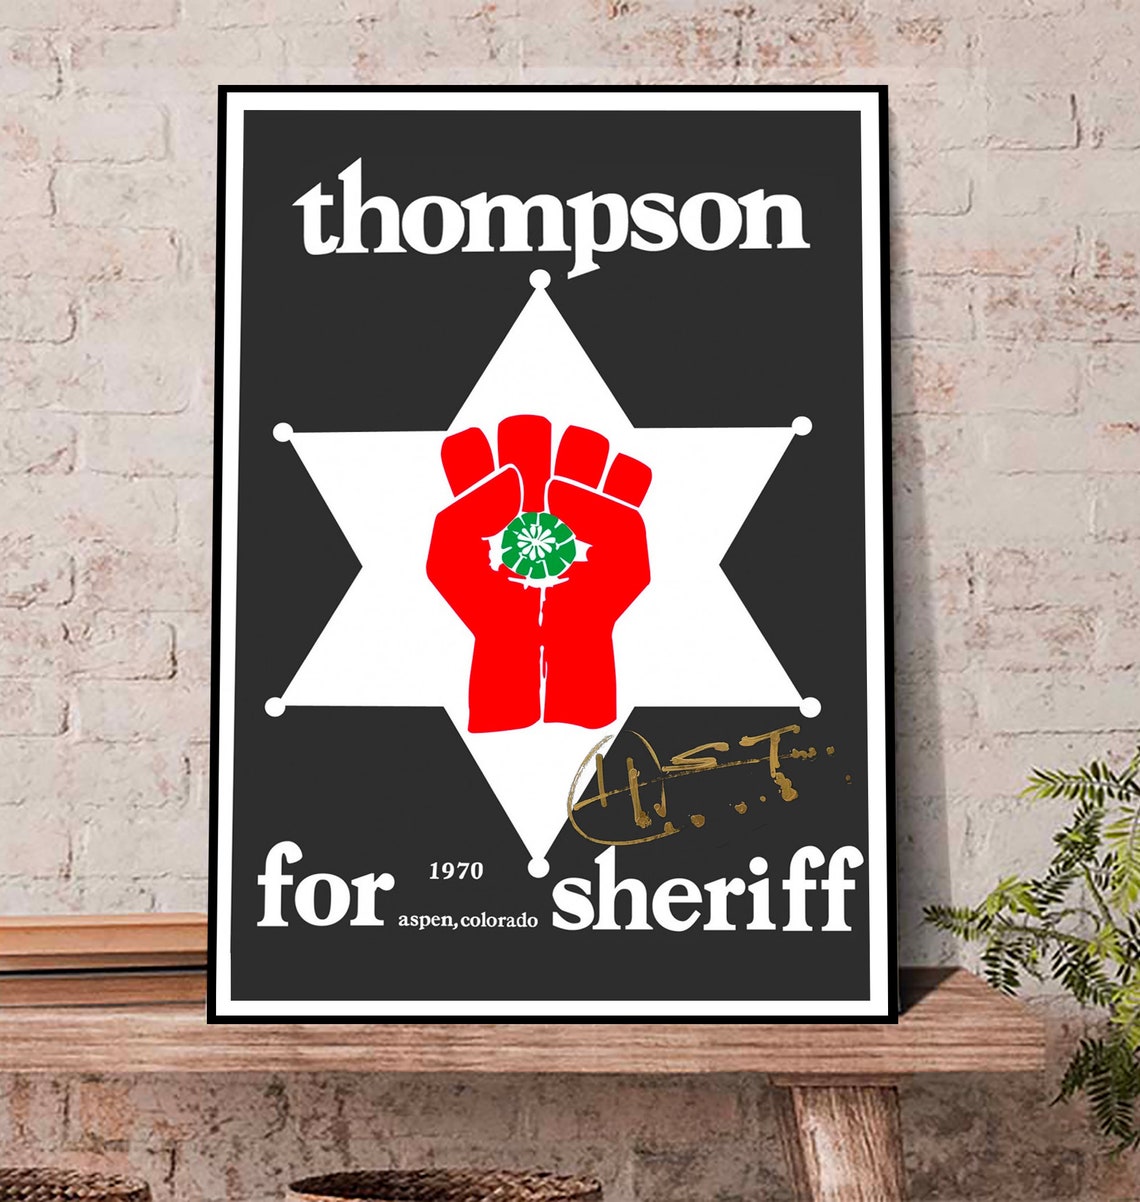 Thompson For Sheriff Poster Hunter S. Thompson Signature Canvas Poster, Sheriff Poster Signed Wall Decor